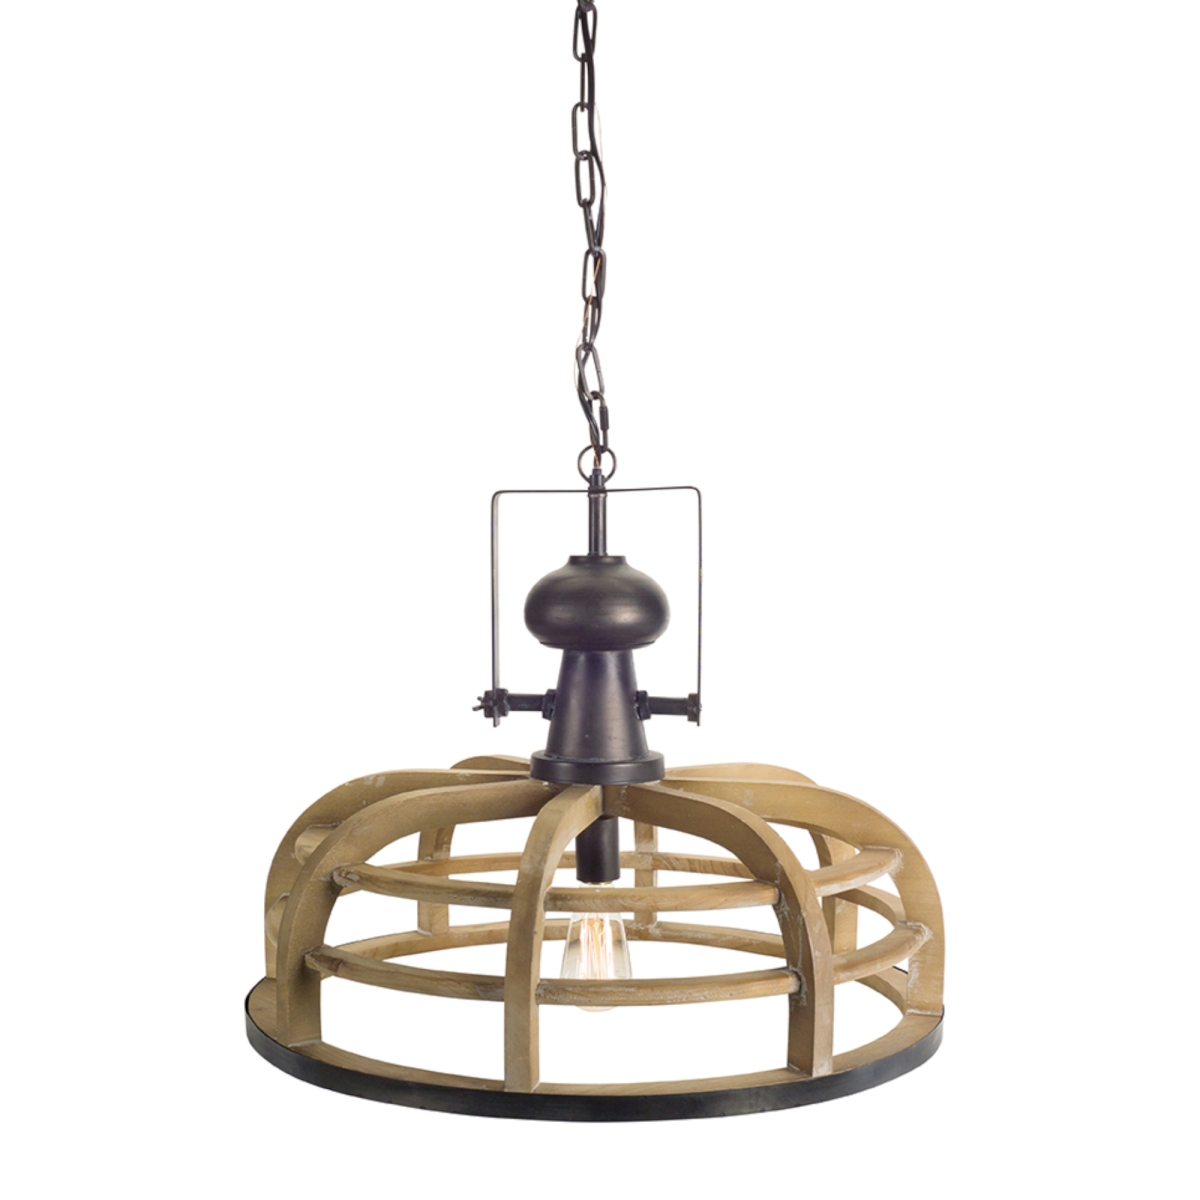 72500ds 58.5 X 23.5 In. Wood & Iron Hanging Lamp Light Fixtures, Brown & Black